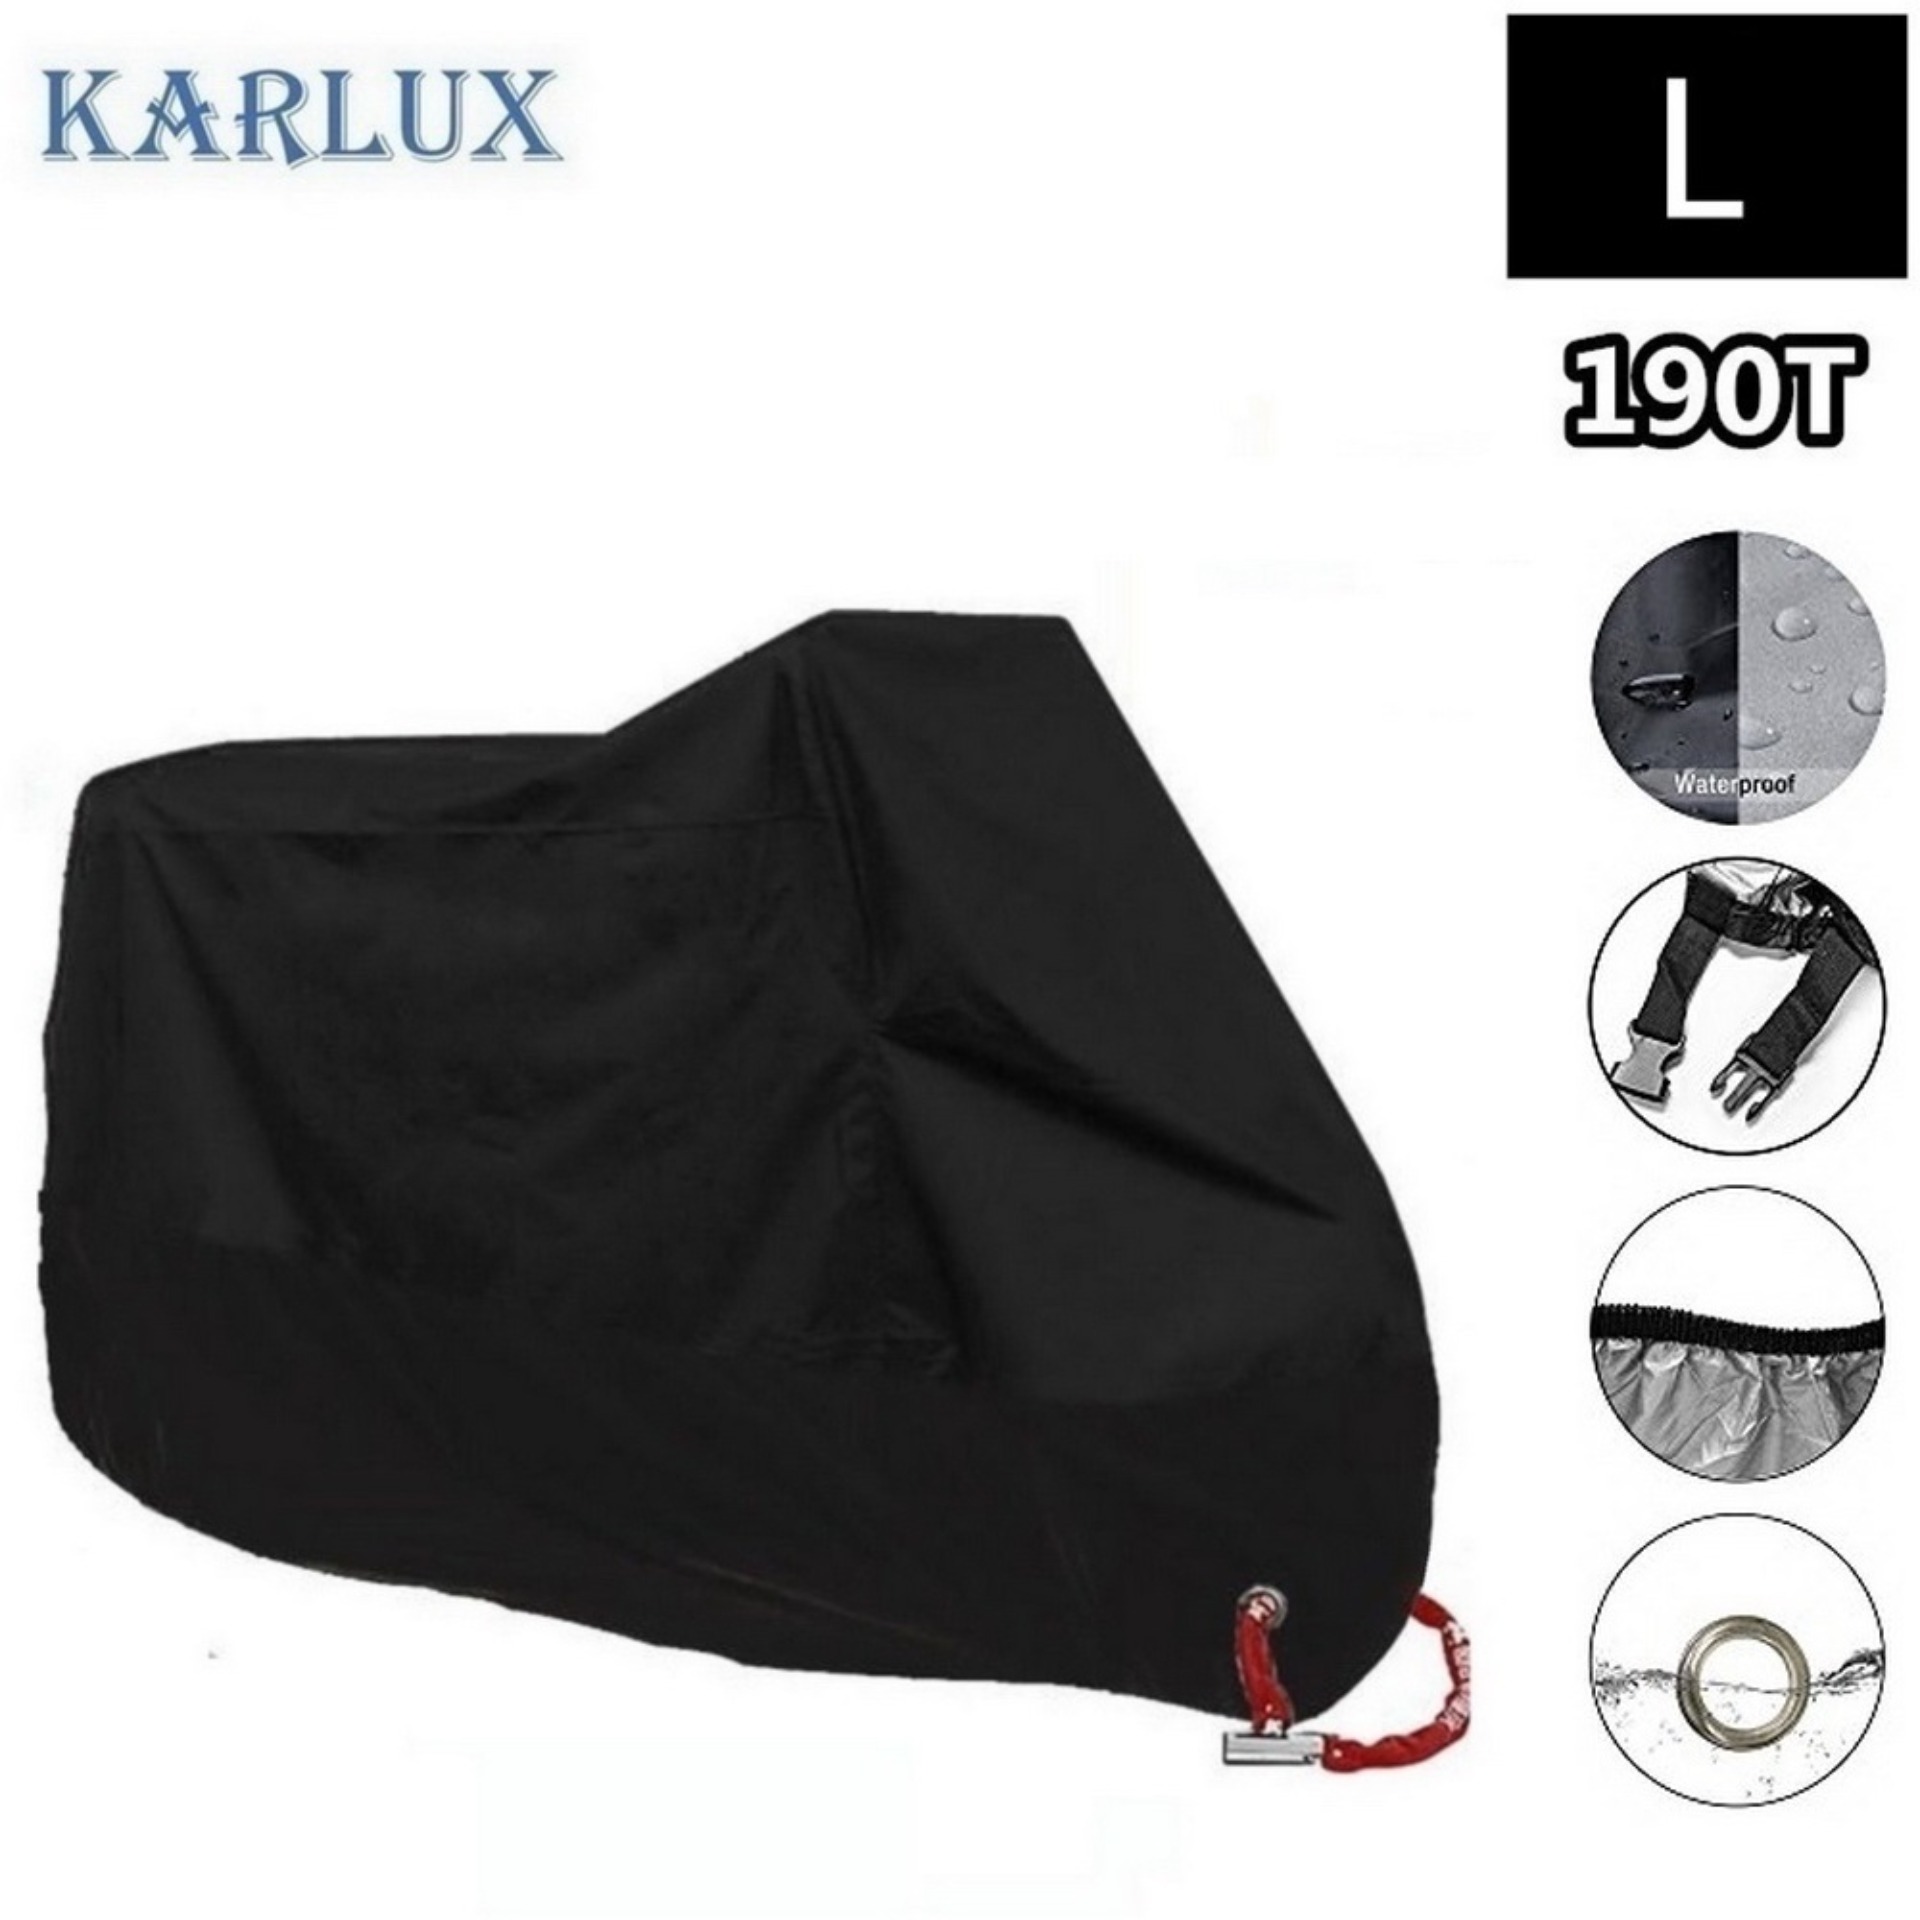 Karlux Large ผ้าคลุมรถมอเตอร์ไซค์ บิ๊กไบค์ จักยาน กันน้ำ กันแดด กันฝุ่น สีดำ Black Motorbike Waterproof Cover Protector Case Cover Rain Protection Breathable